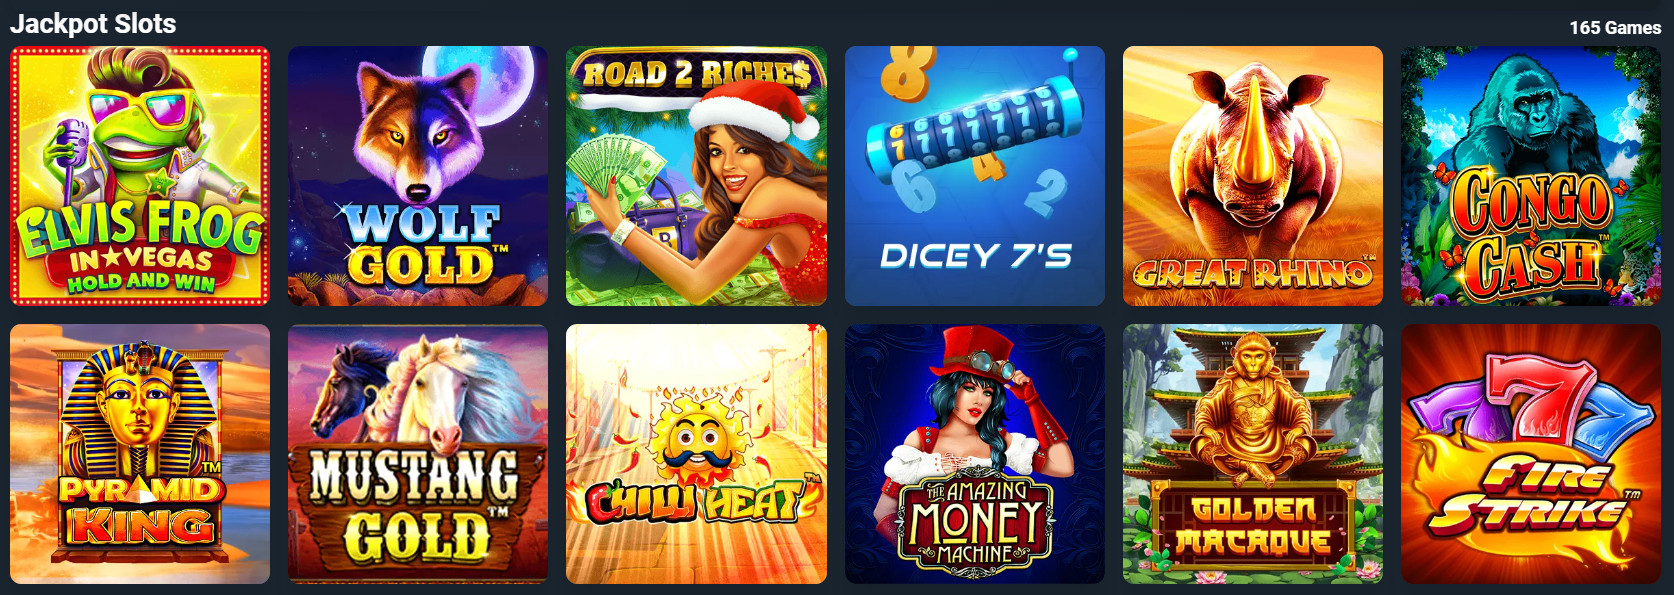 Jackpot Games Section at Bitsler Casino